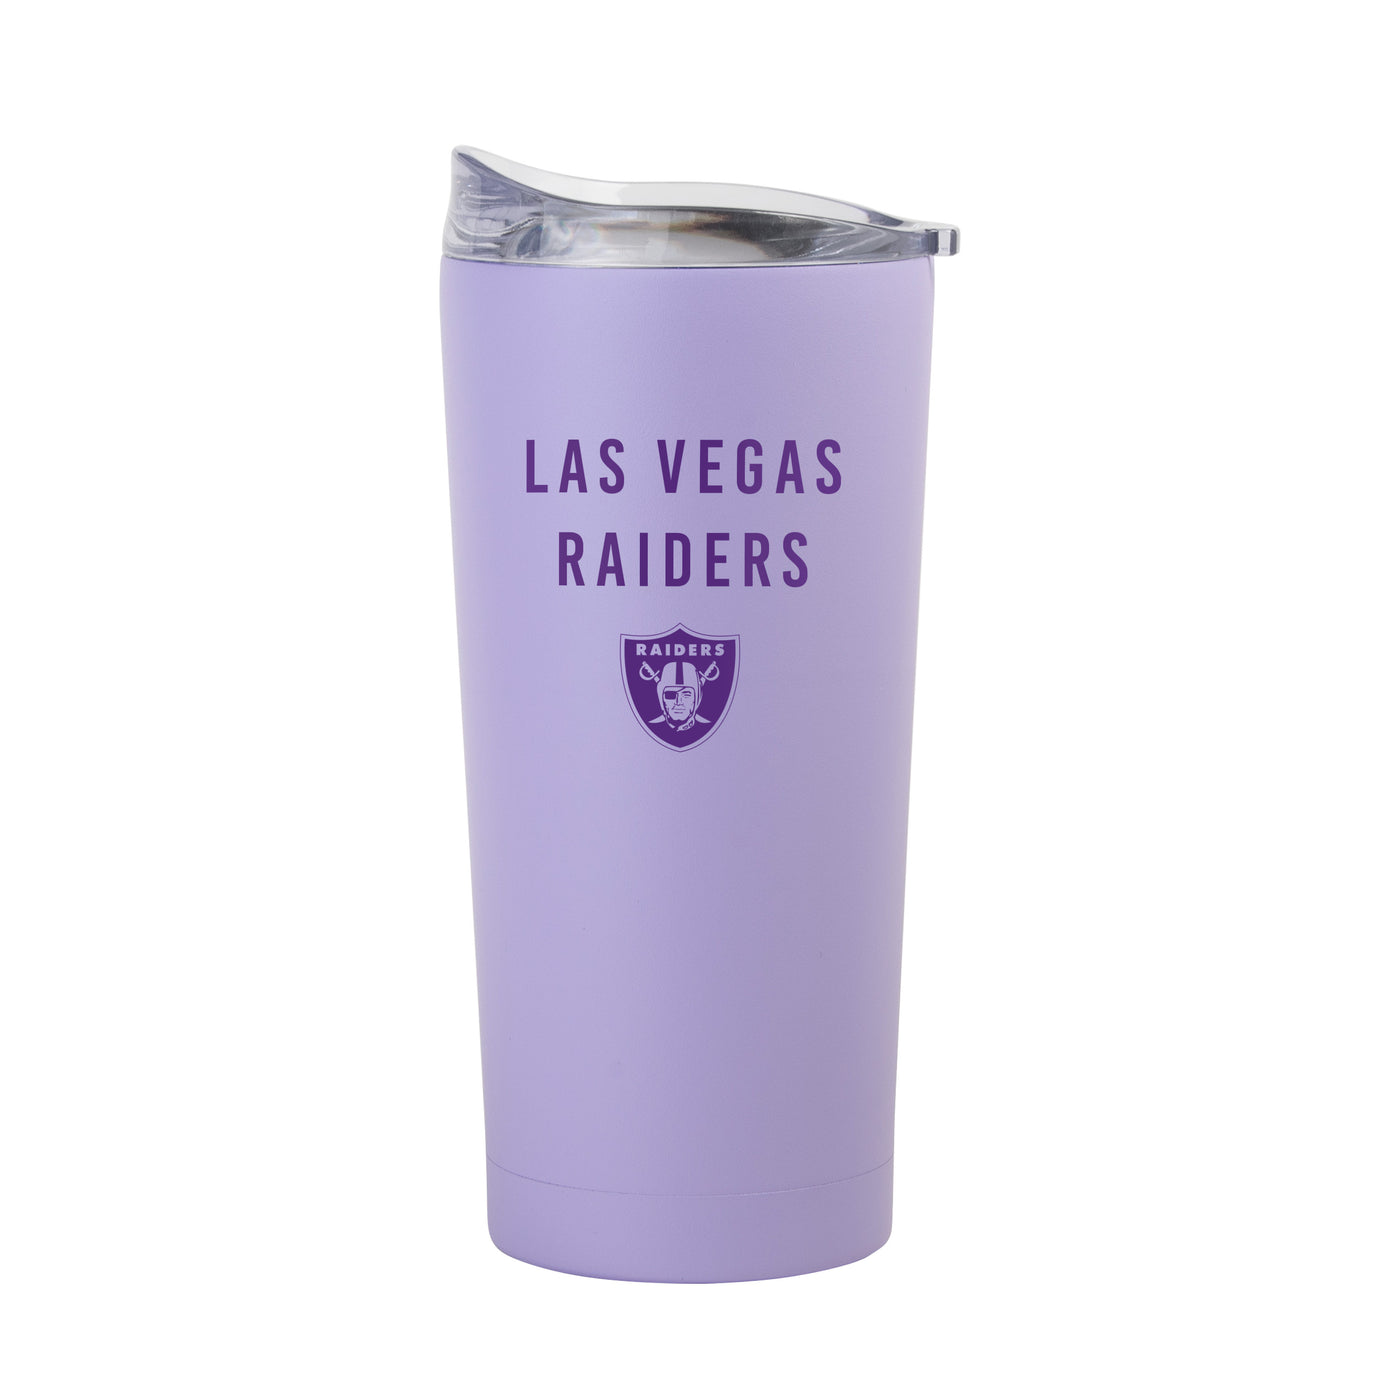 Las Vegas Raiders 20oz Tonal Lavender Powder Coat Tumbler